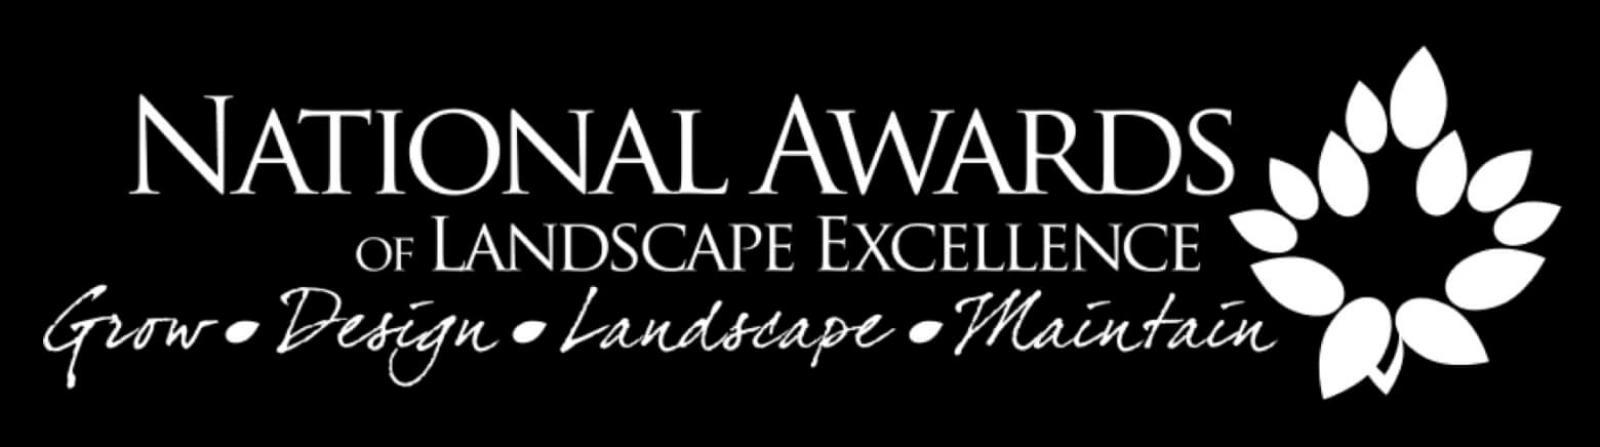 National landscape award winners announced for 2020